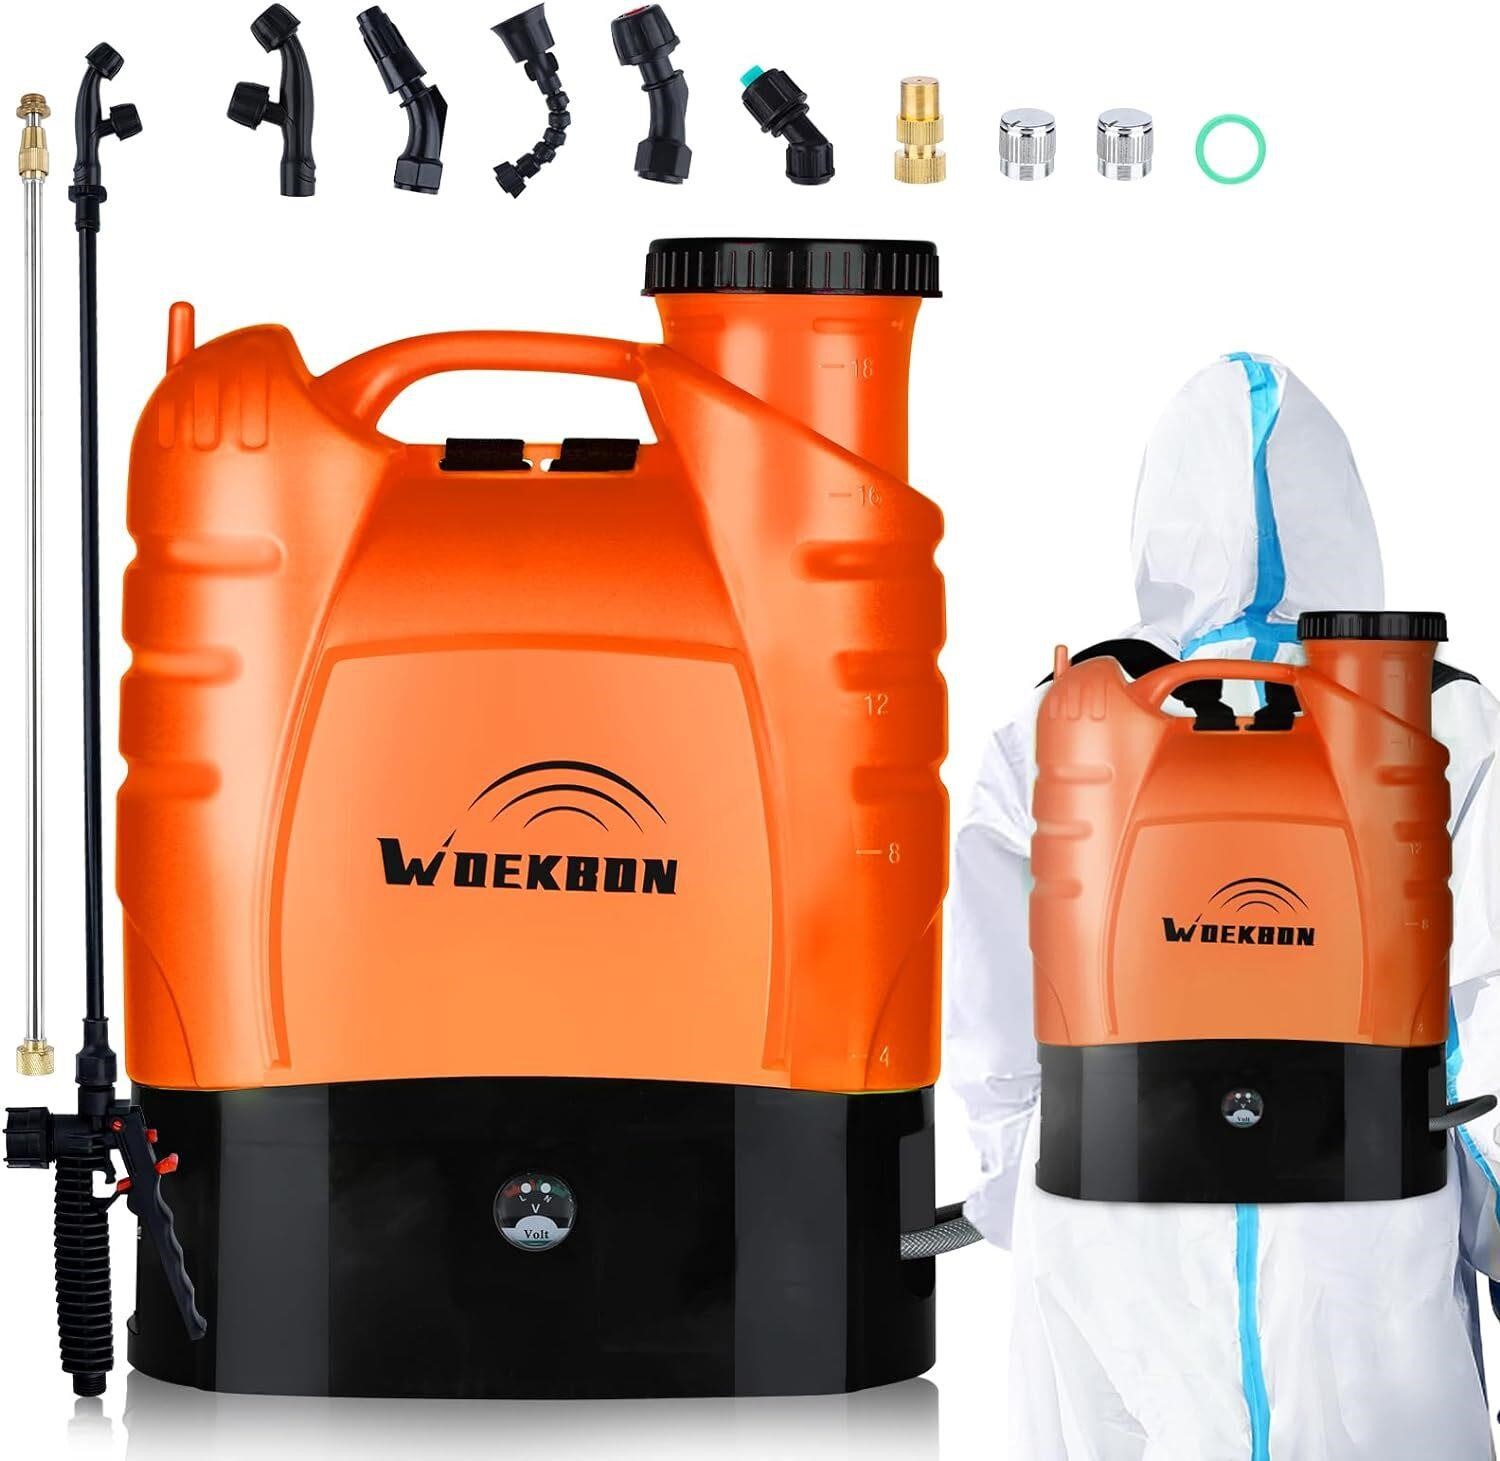 WOEKBON 4 Gallon Battery Powered Sprayer